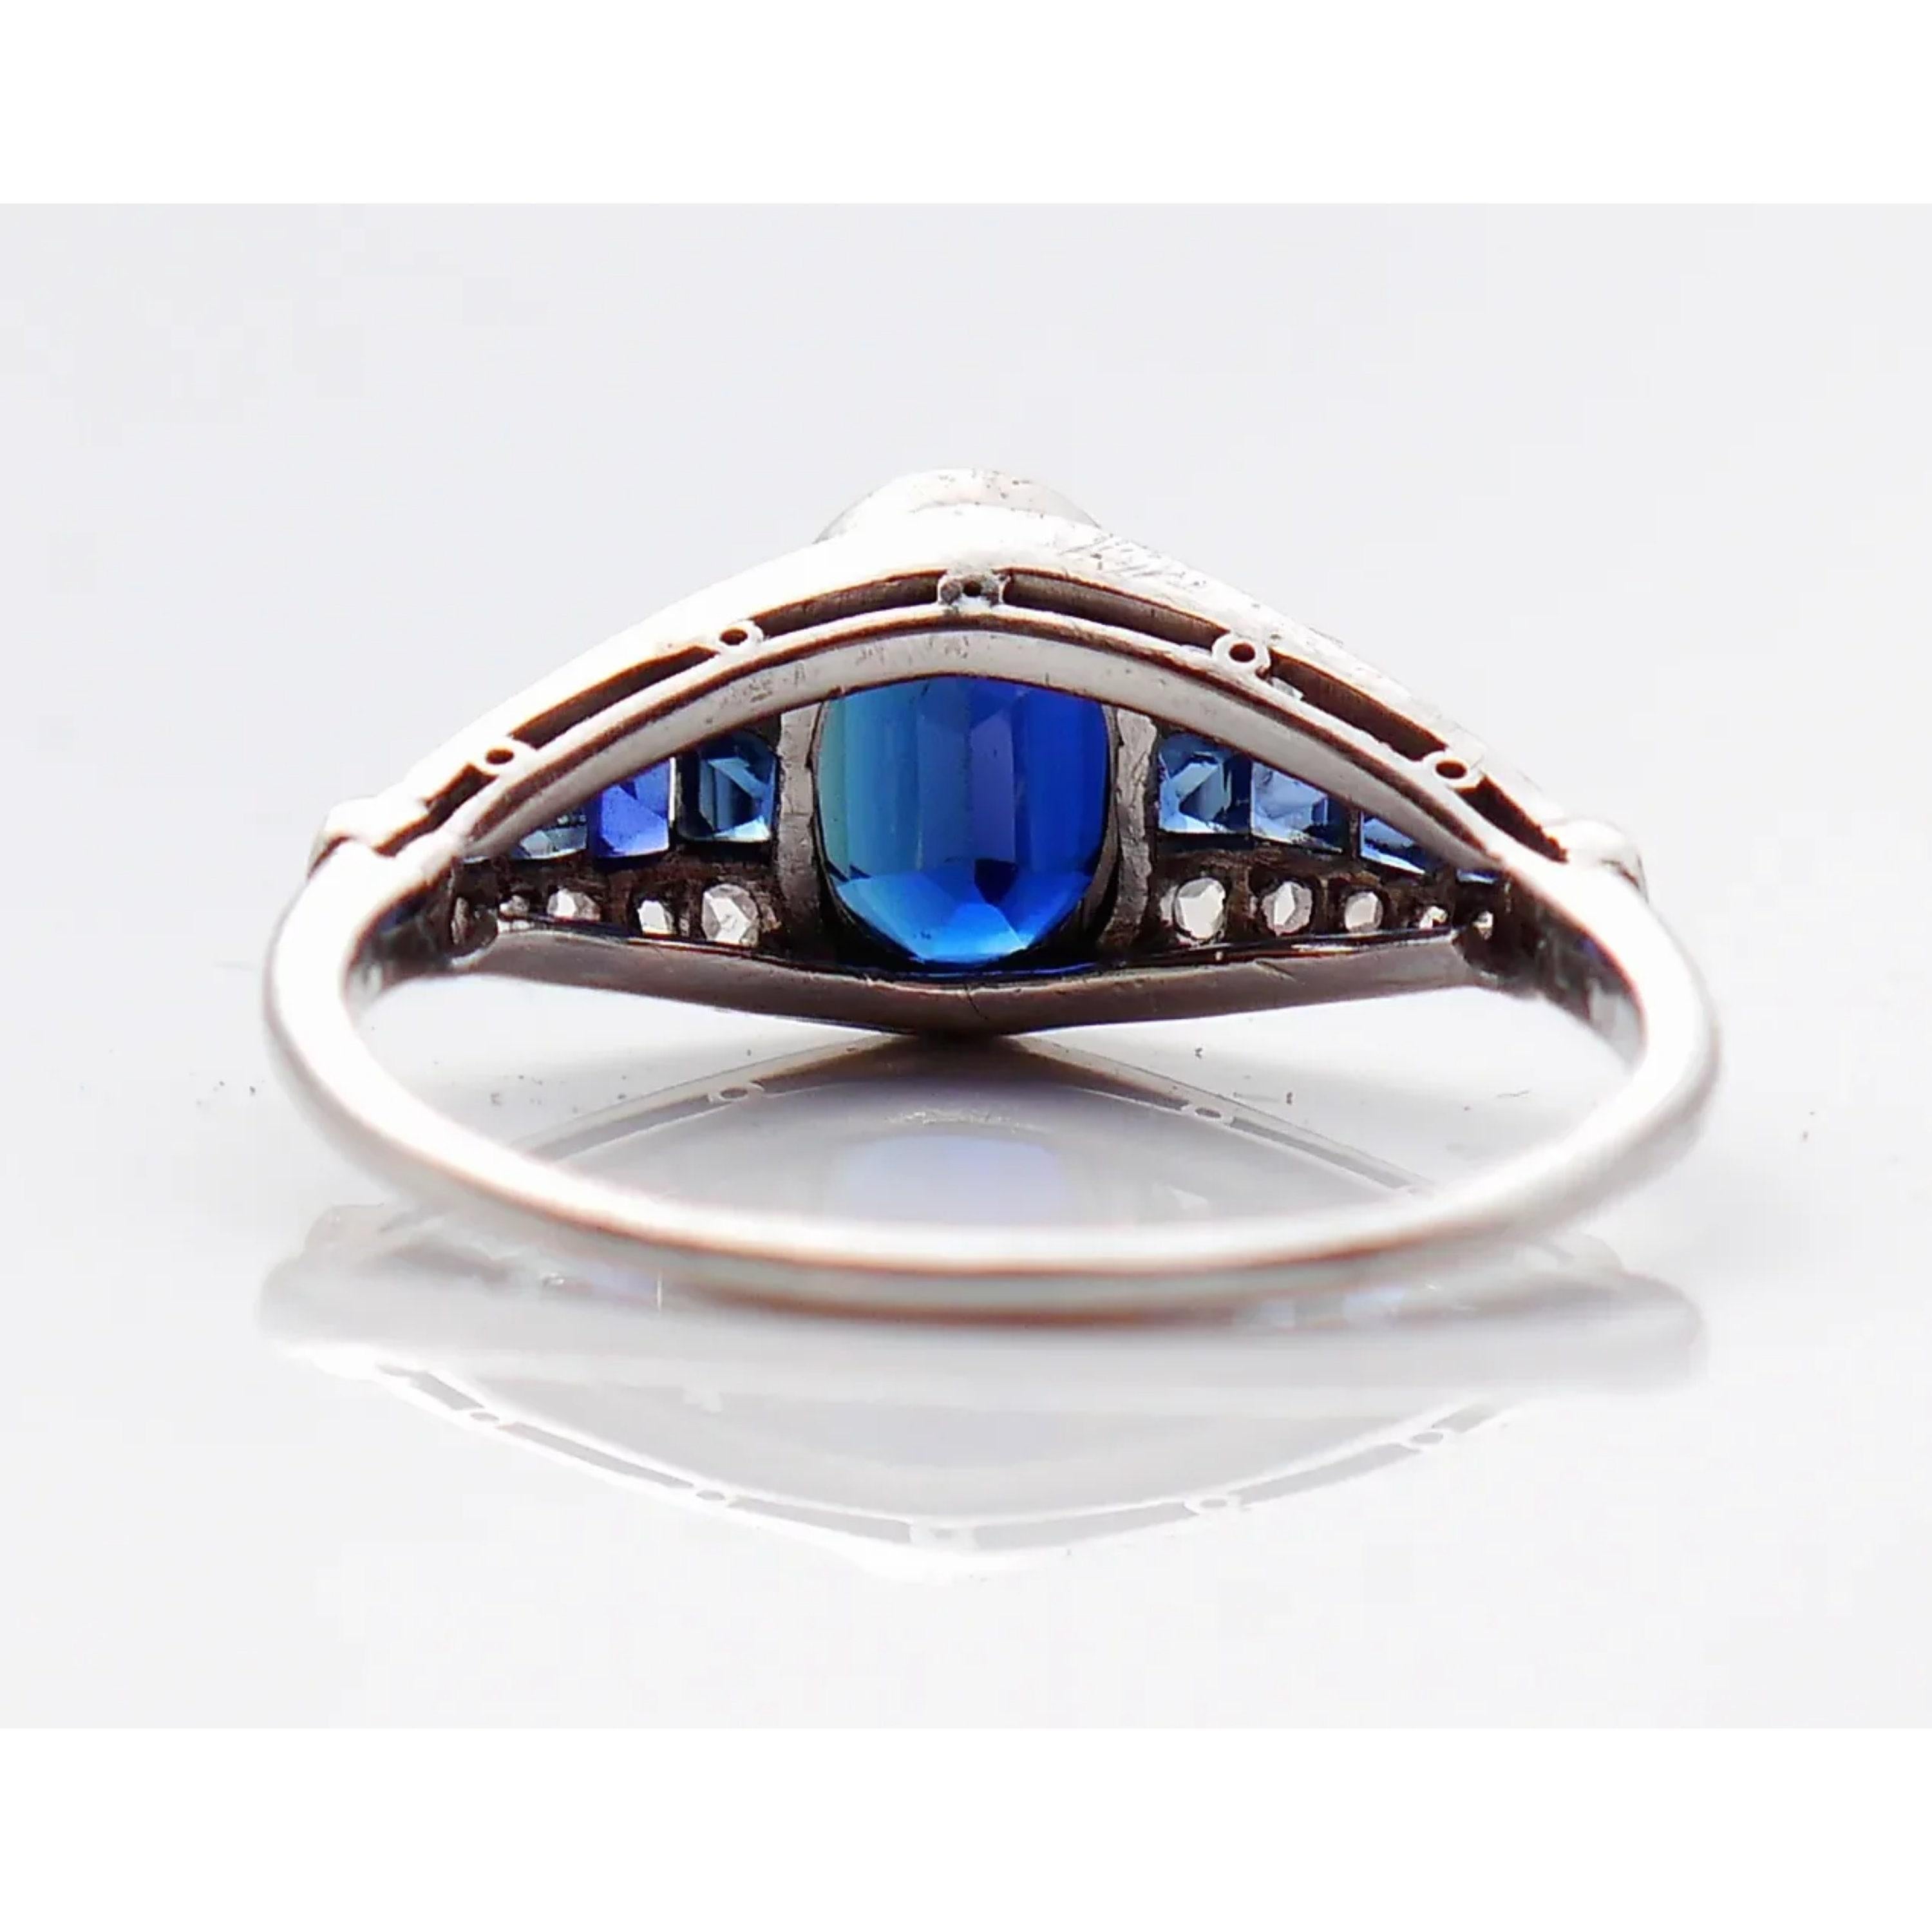 For Sale:  3 Carat Oval Cut Sapphire Engagement Ring Unique Diamond Half Eternity Band 3